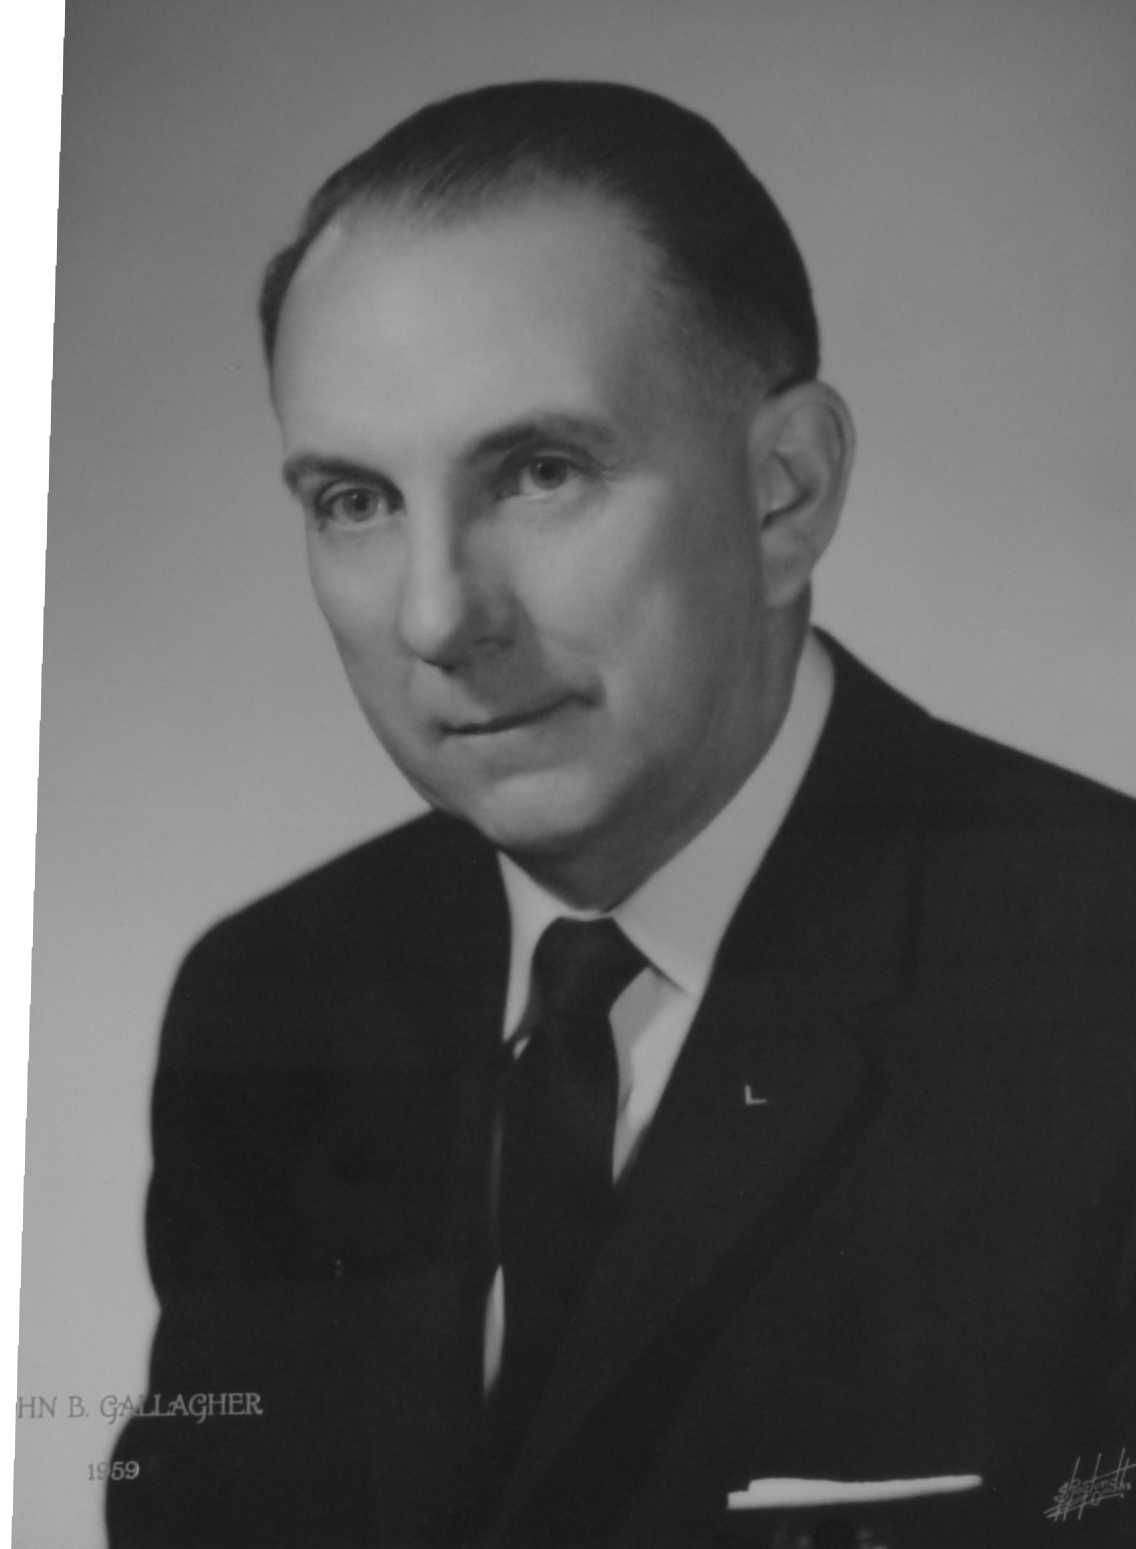 John B. Gallagher, 1959